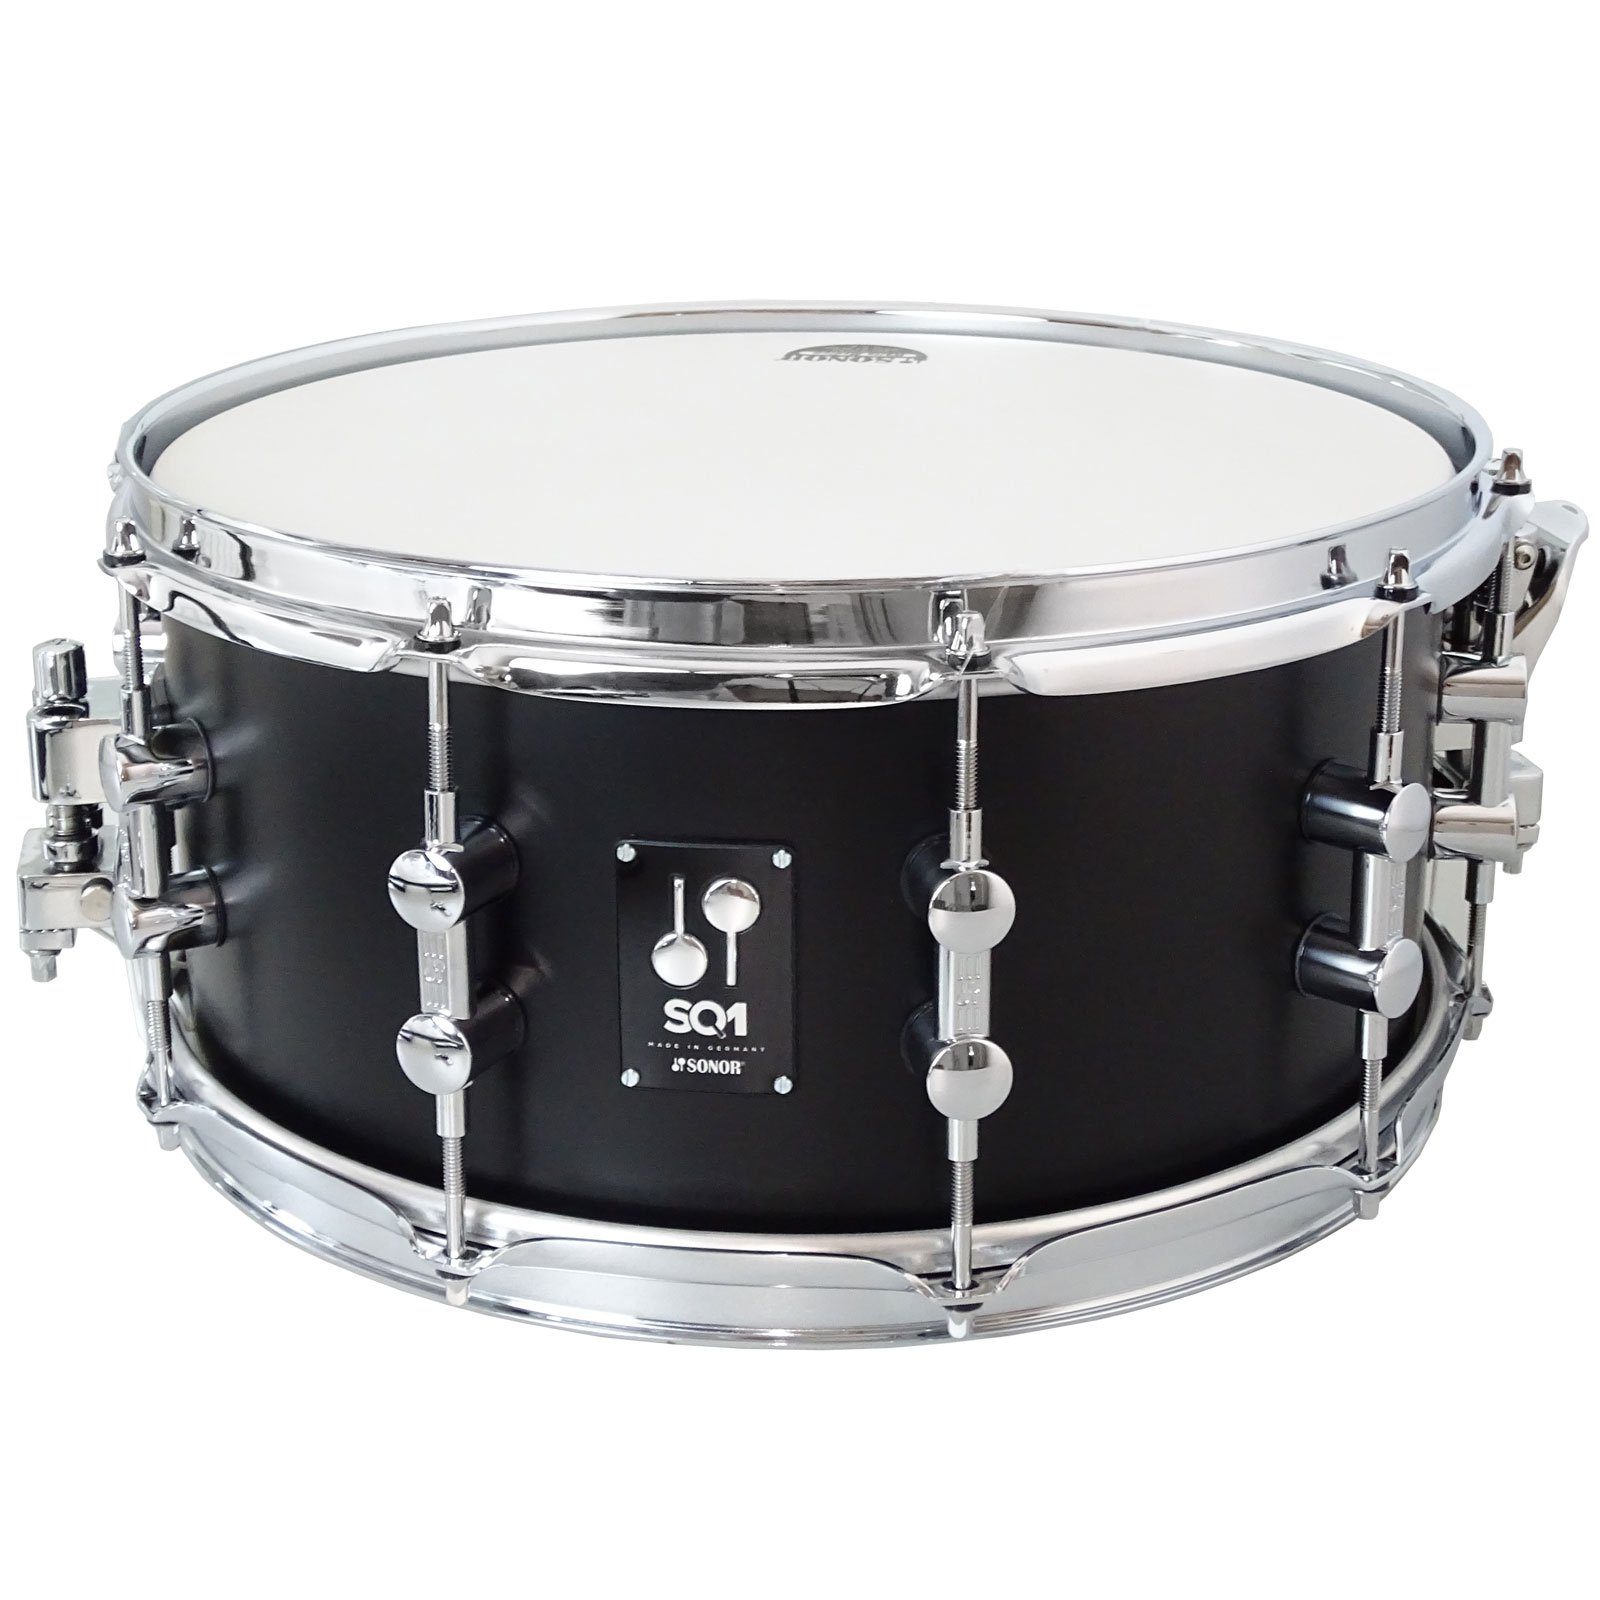 SONOR Schlagzeug Sonor SQ1 1465 Snare-Drum GT Black